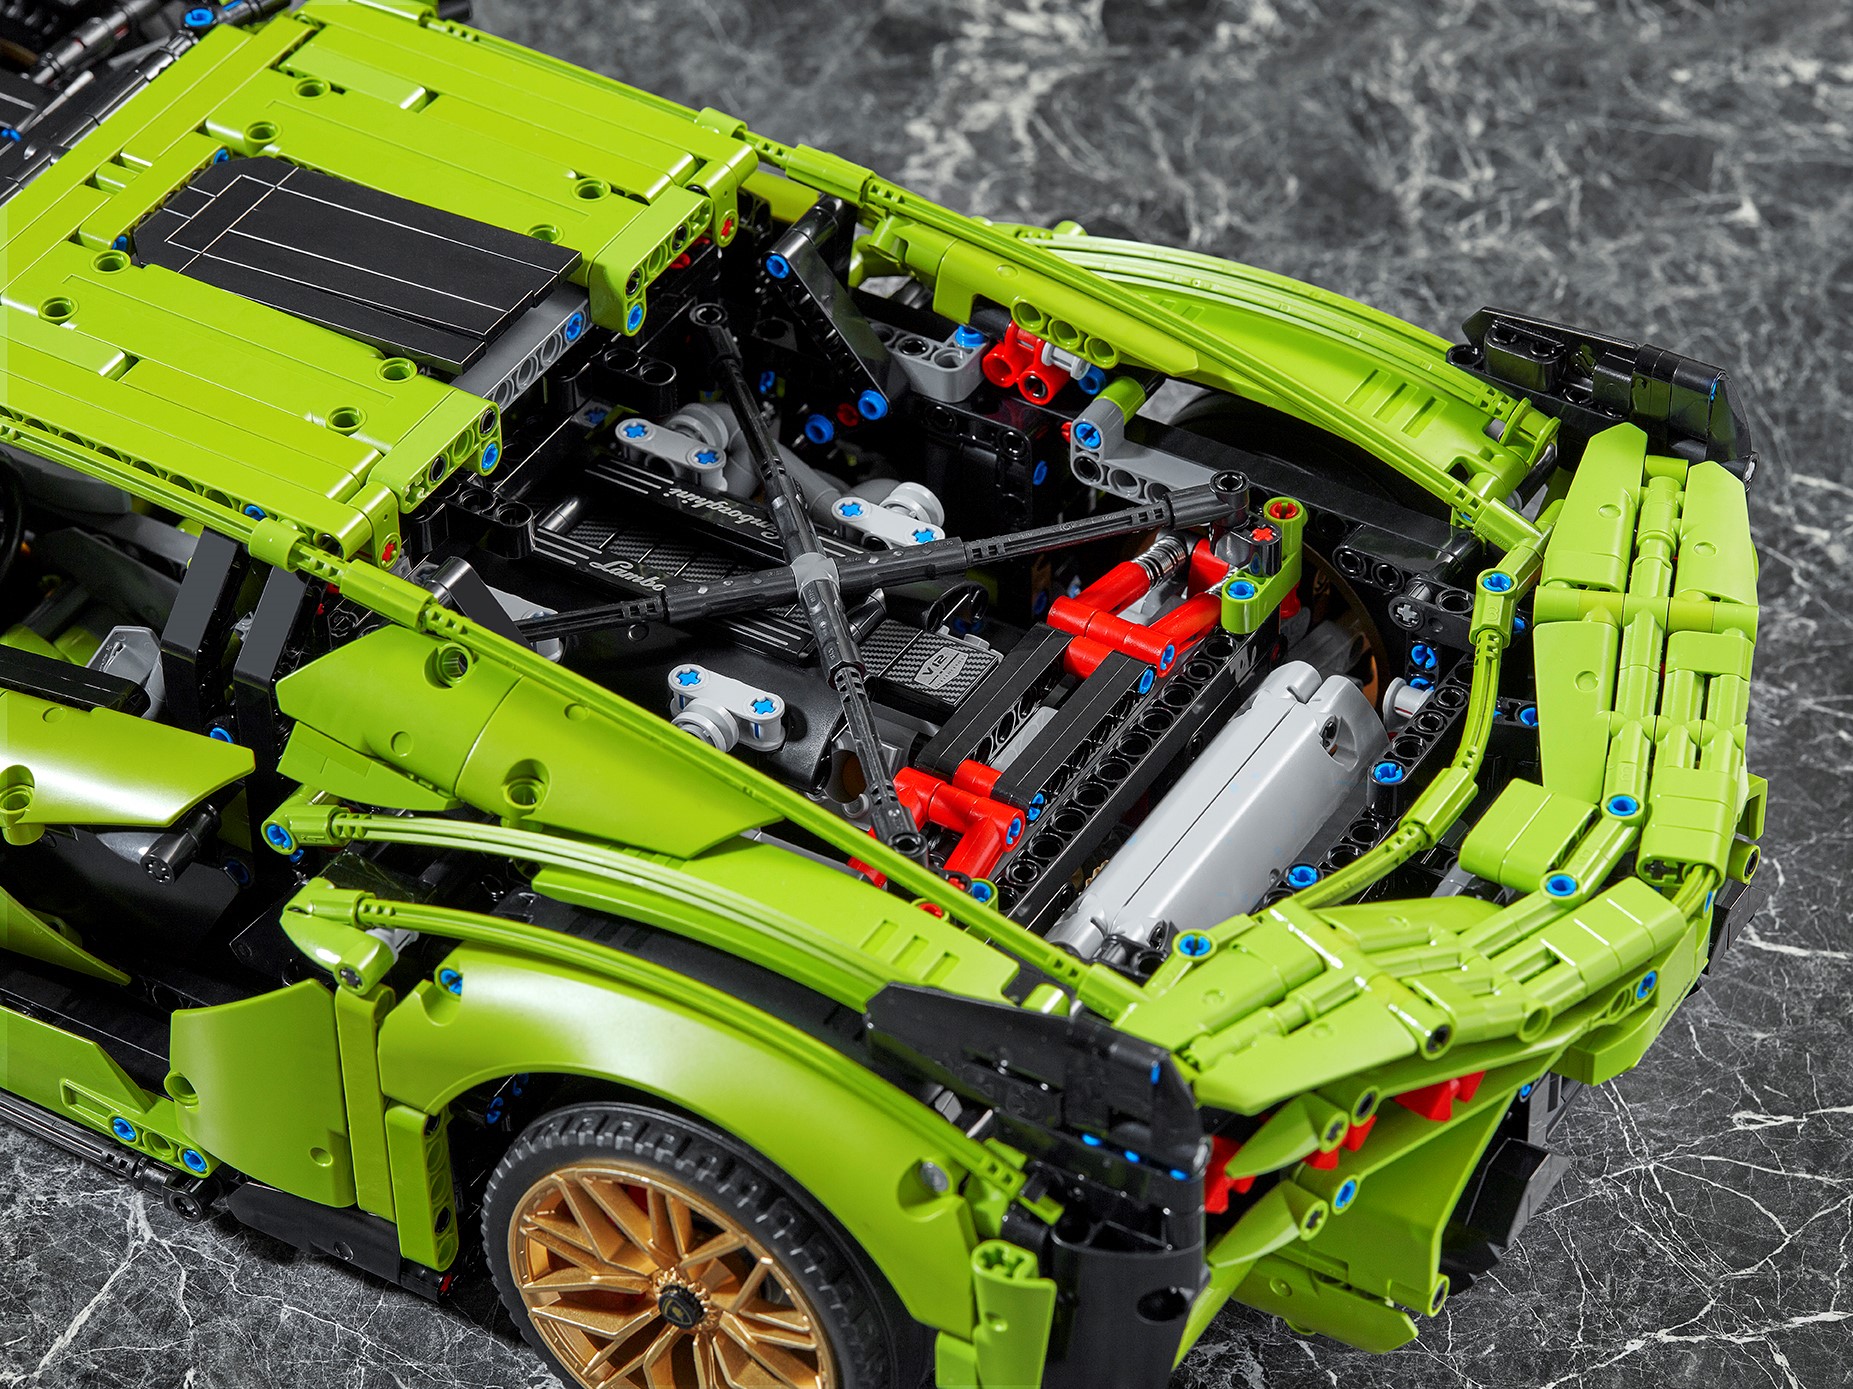 LEGO Technic Lamborghini Sian FKP 37 42115 Brand New!